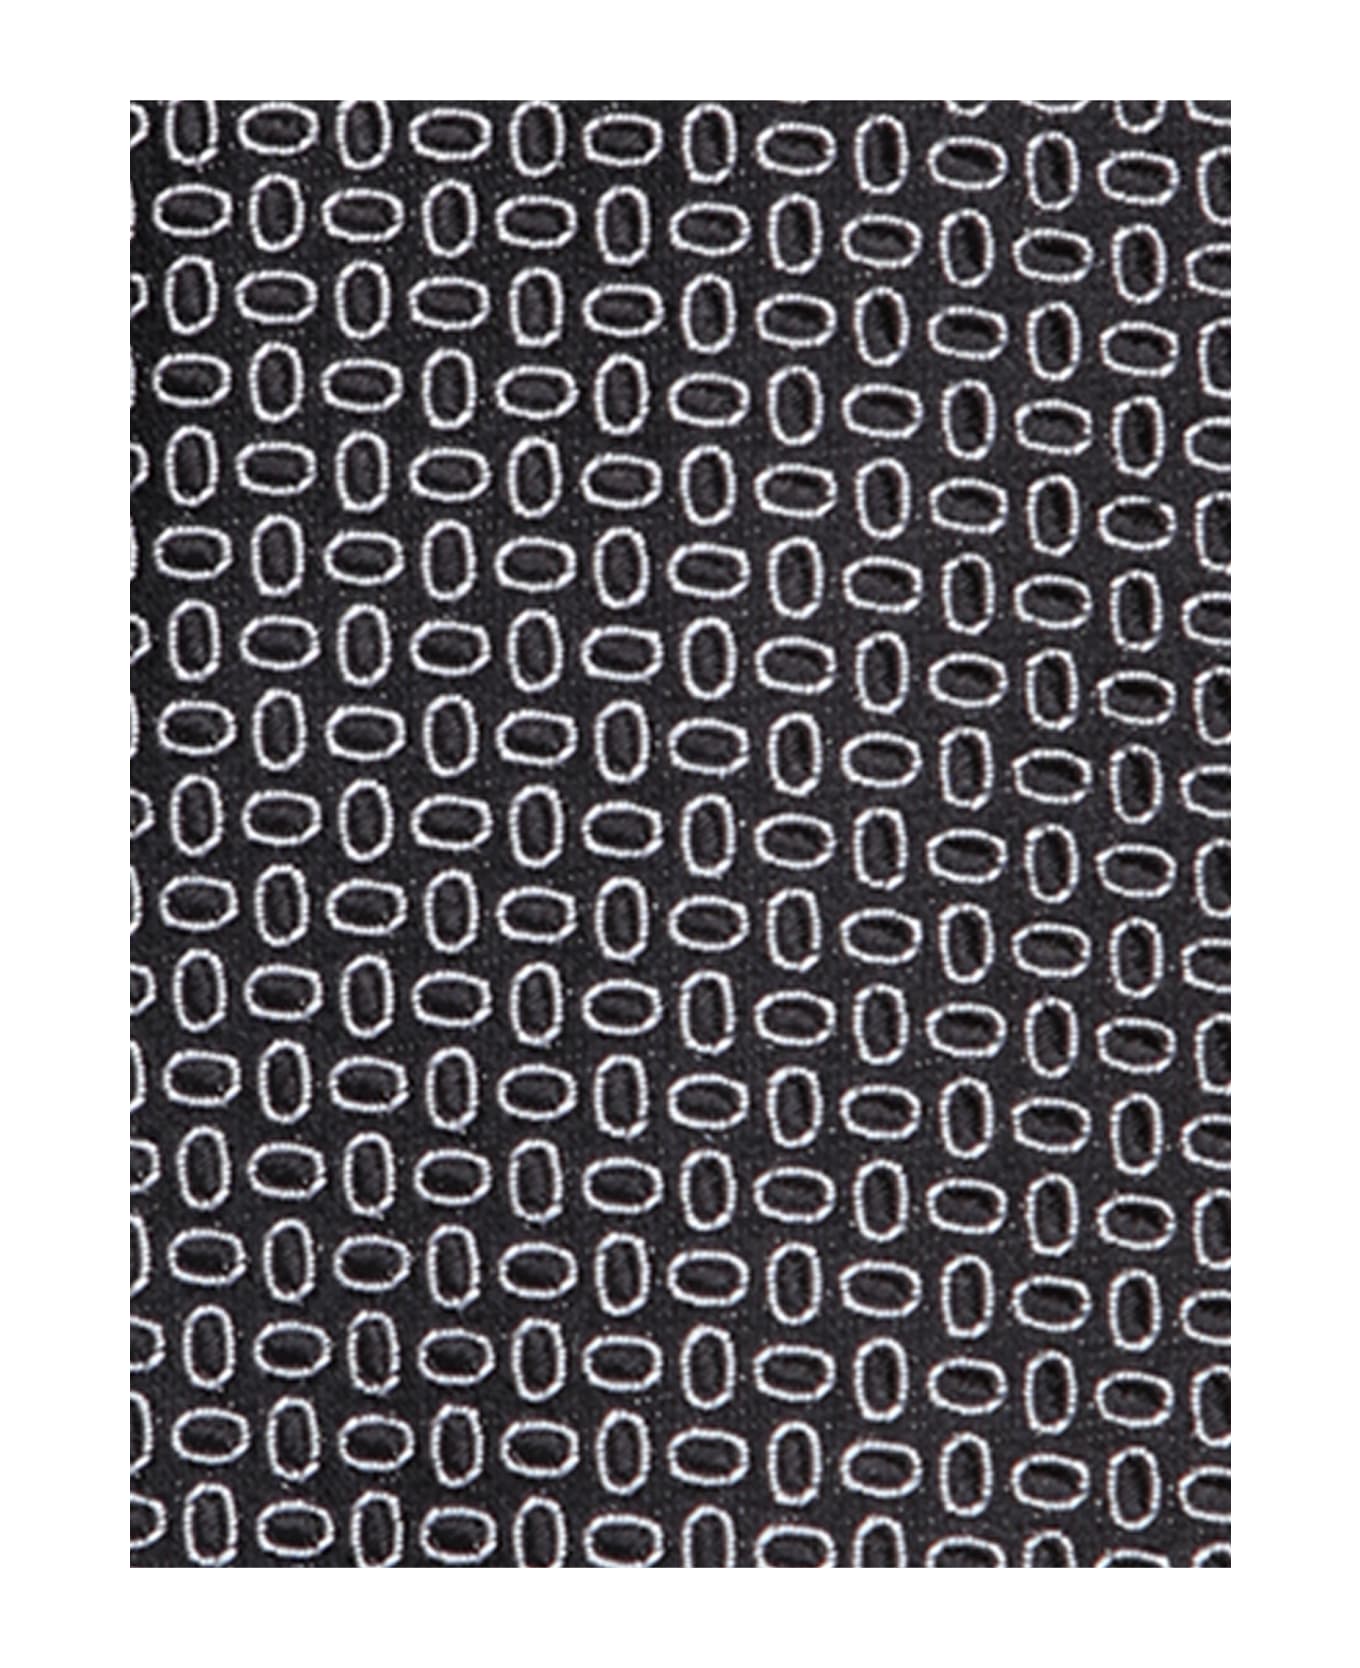 Lardini Micro Pattern Black/grey Tie - Black